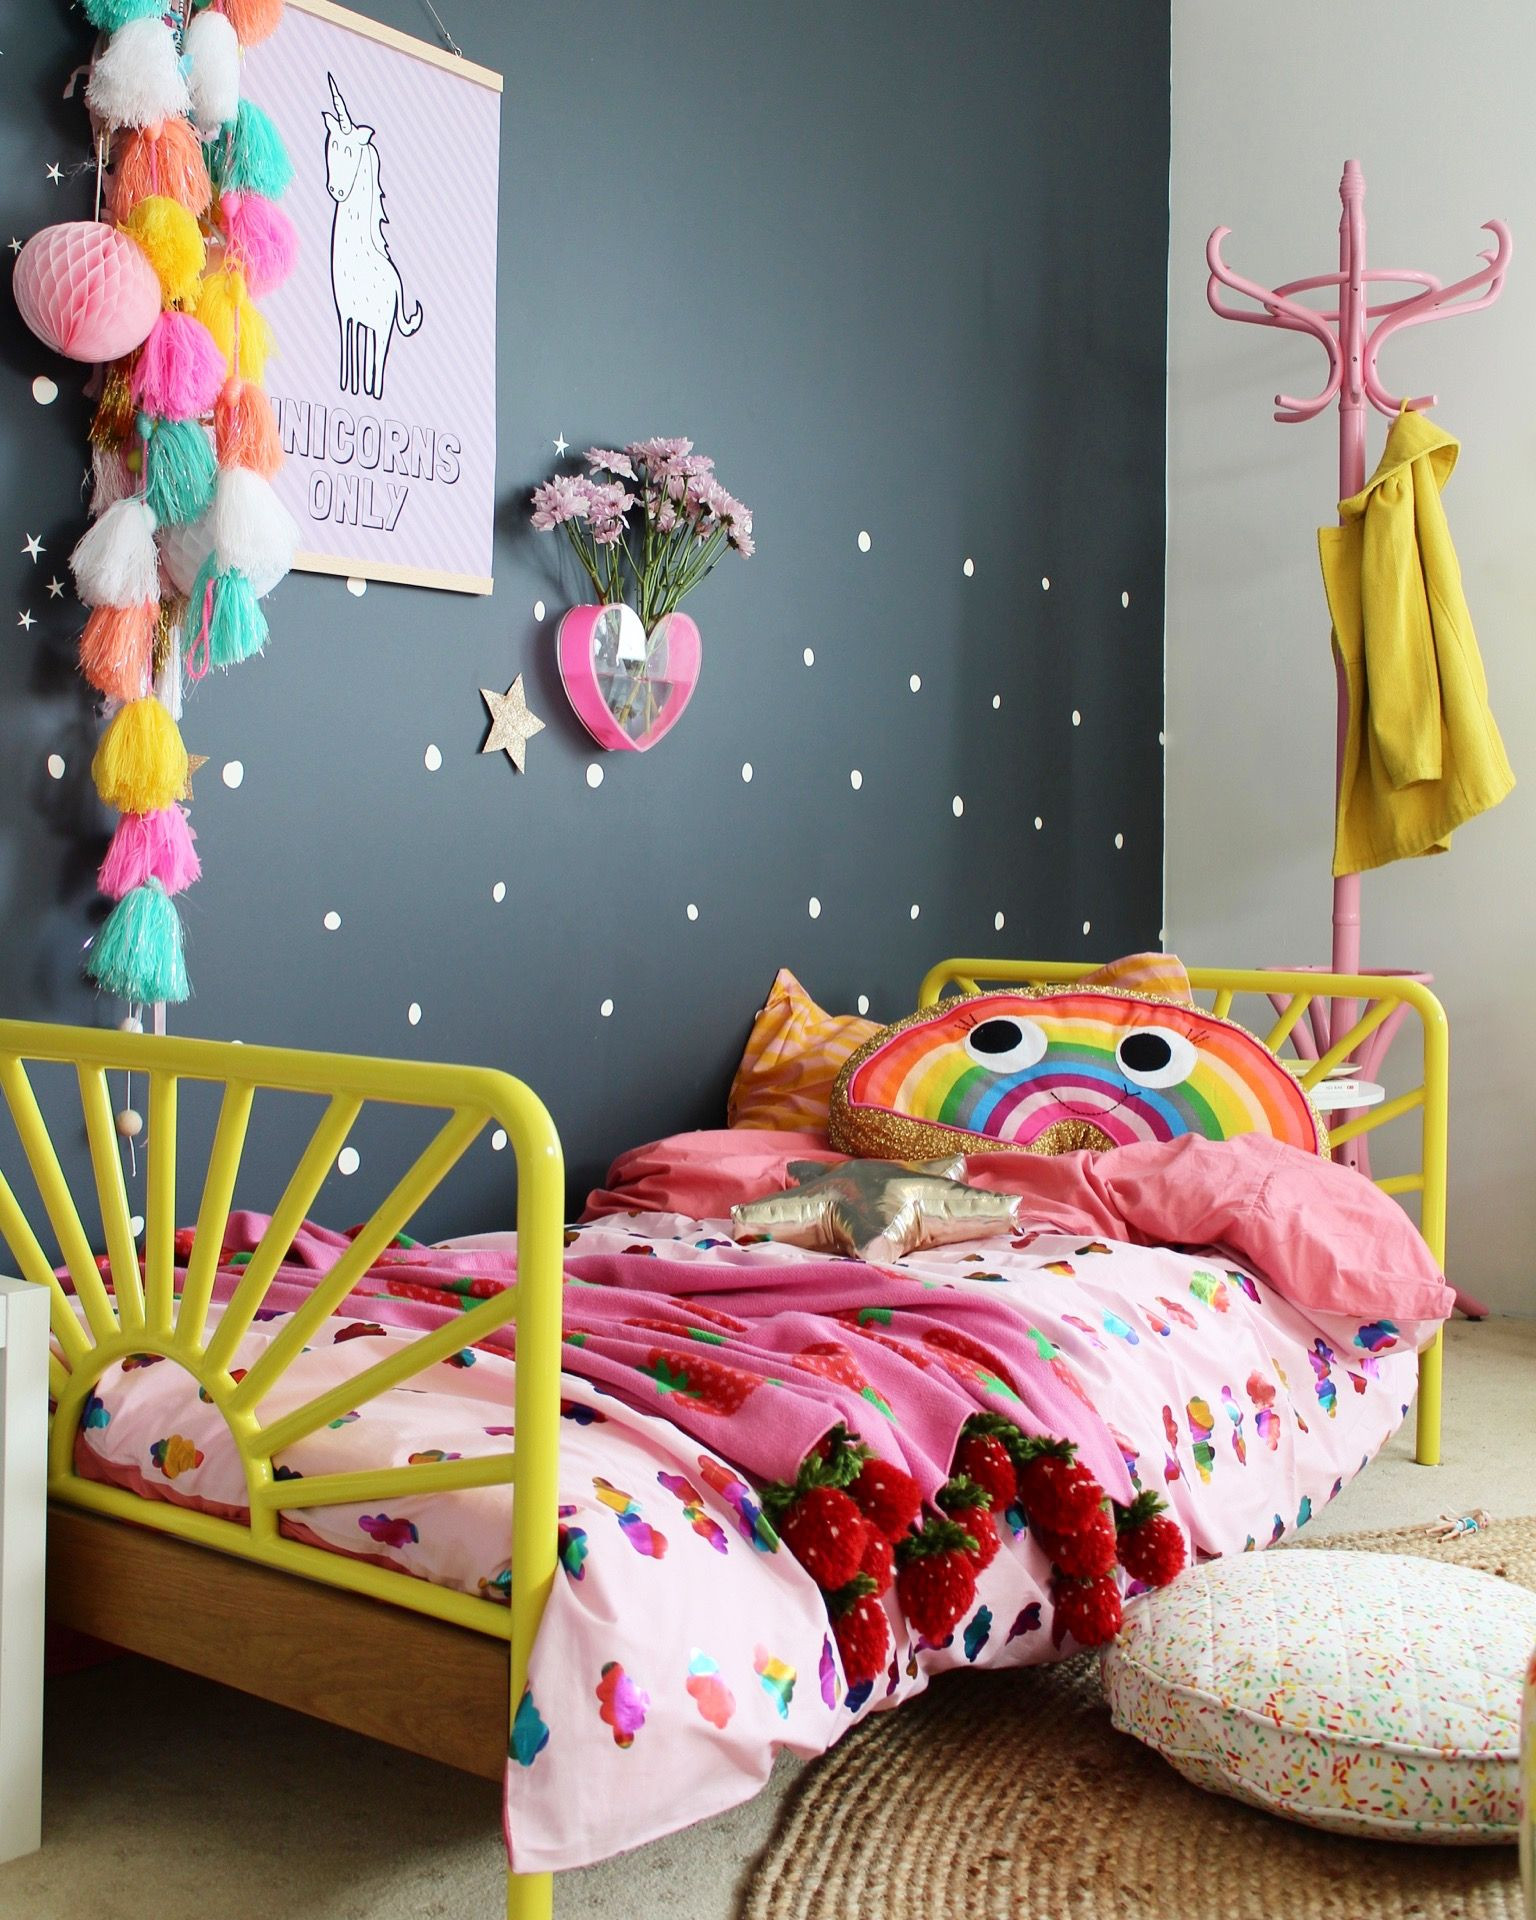 DIY Toddler Room Decor
 25 Amazing Girls Room Decor Ideas for Teenagers